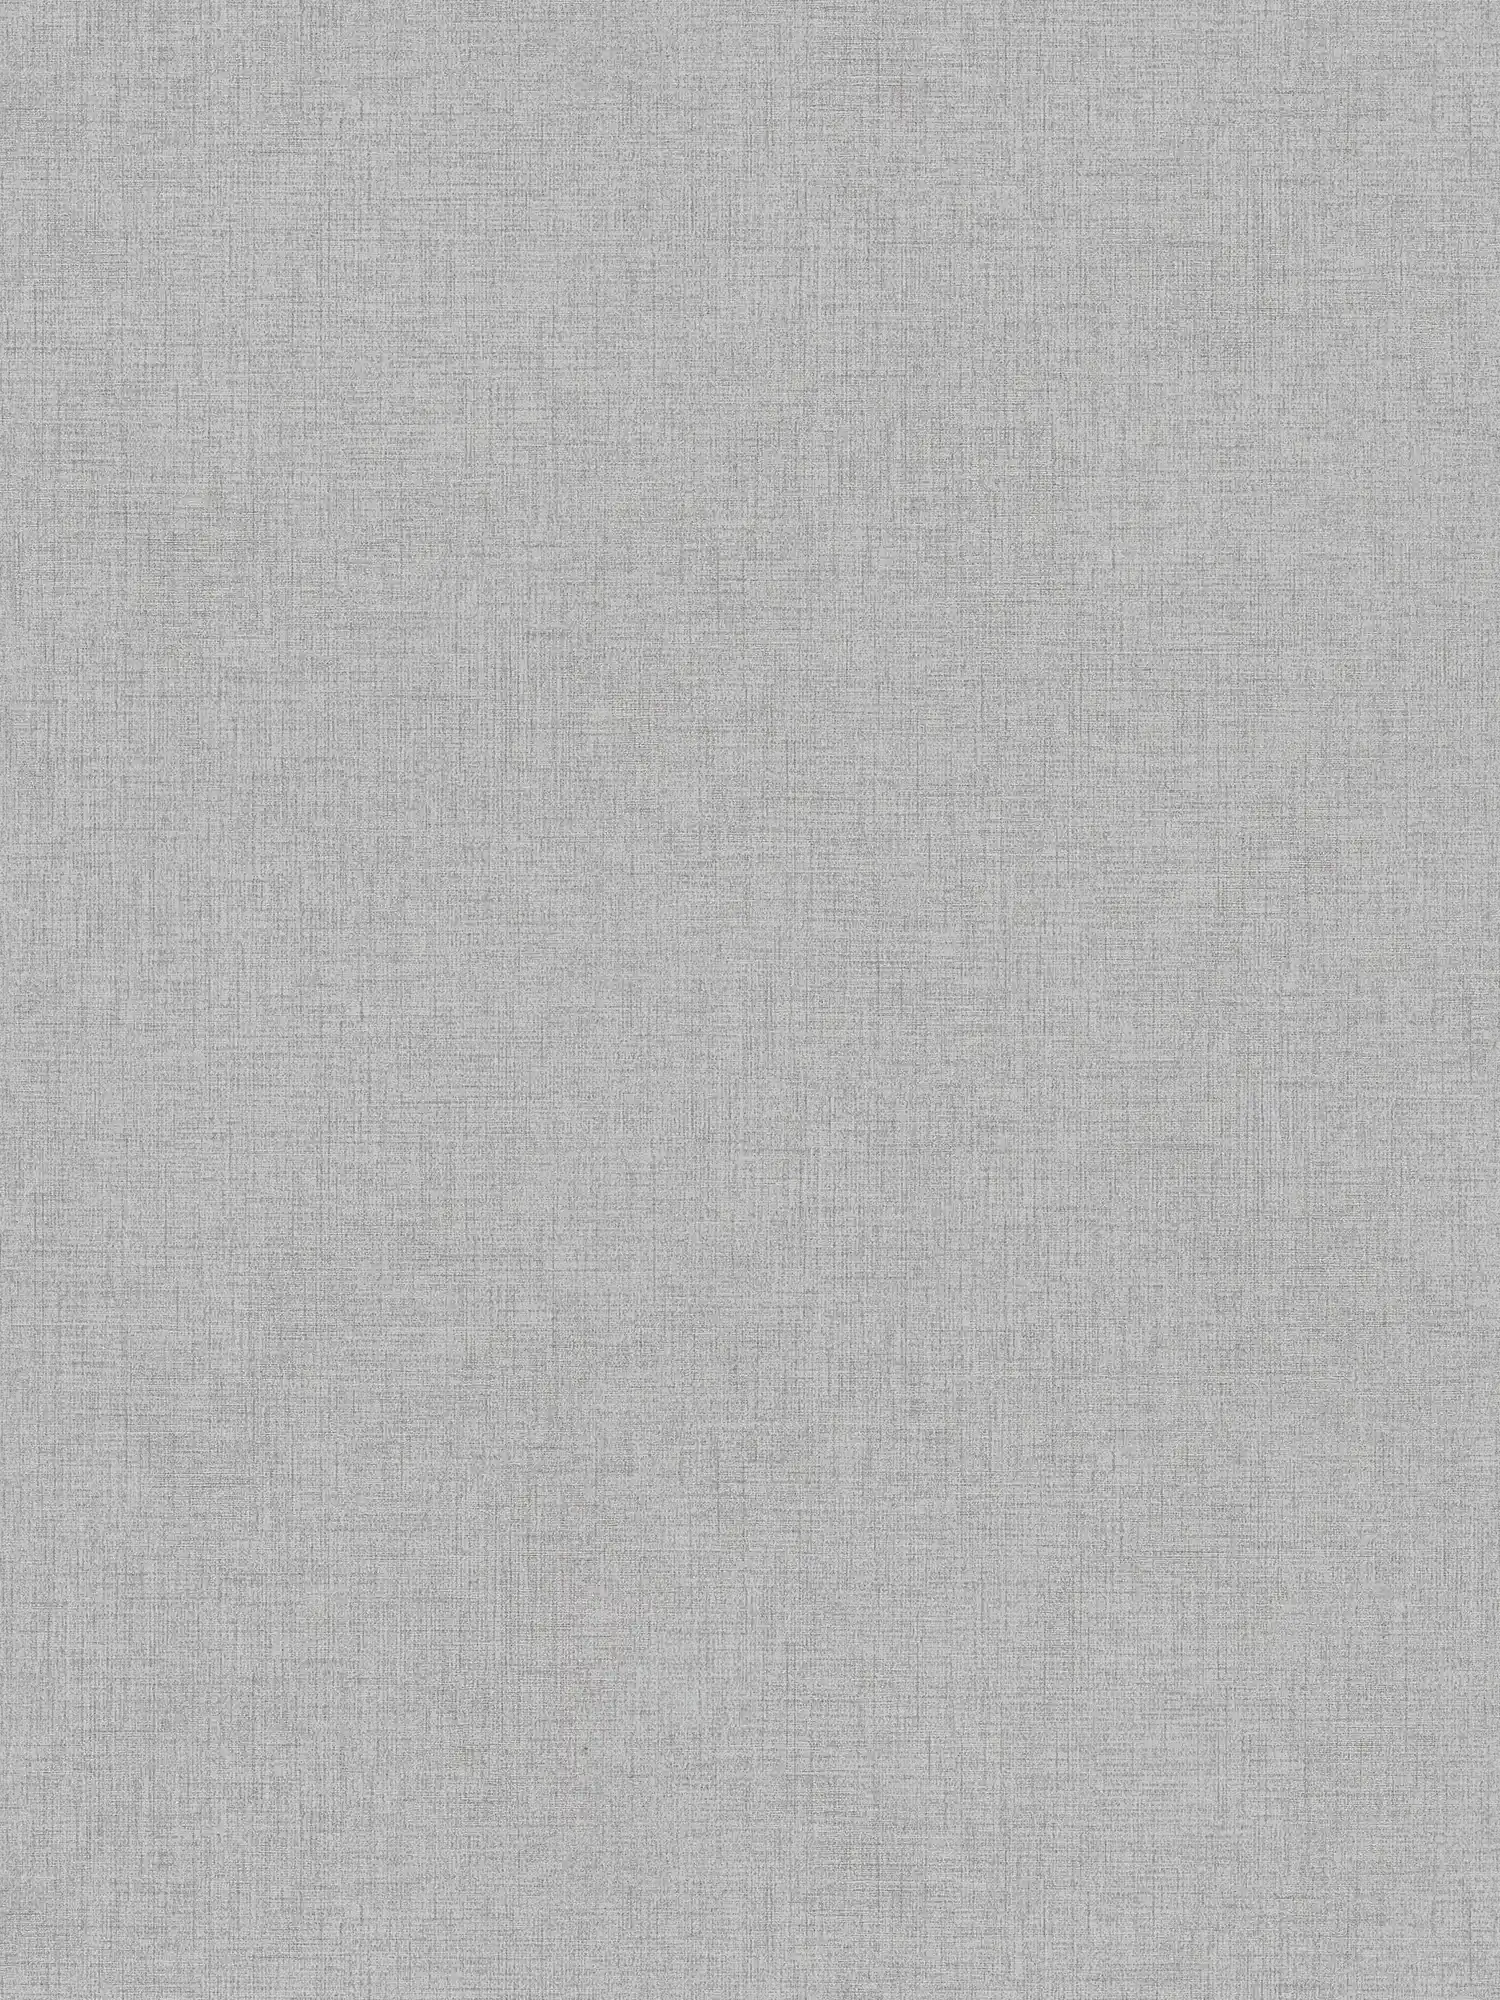 Papel pintado unitario con sutil aspecto de lino - gris
